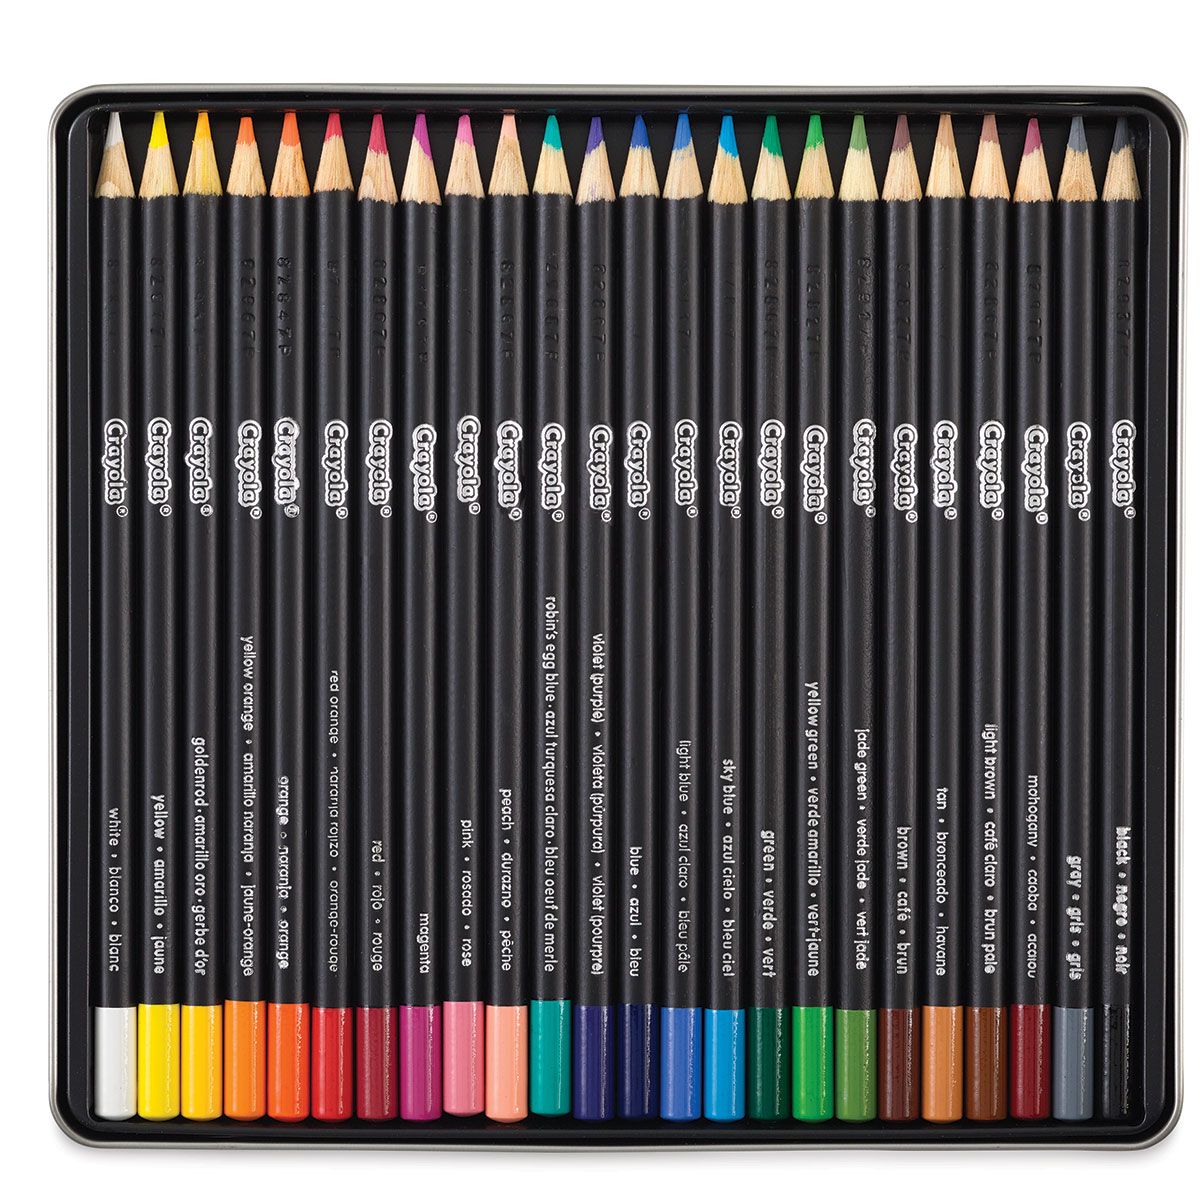 Crayola Colored Pencils Review